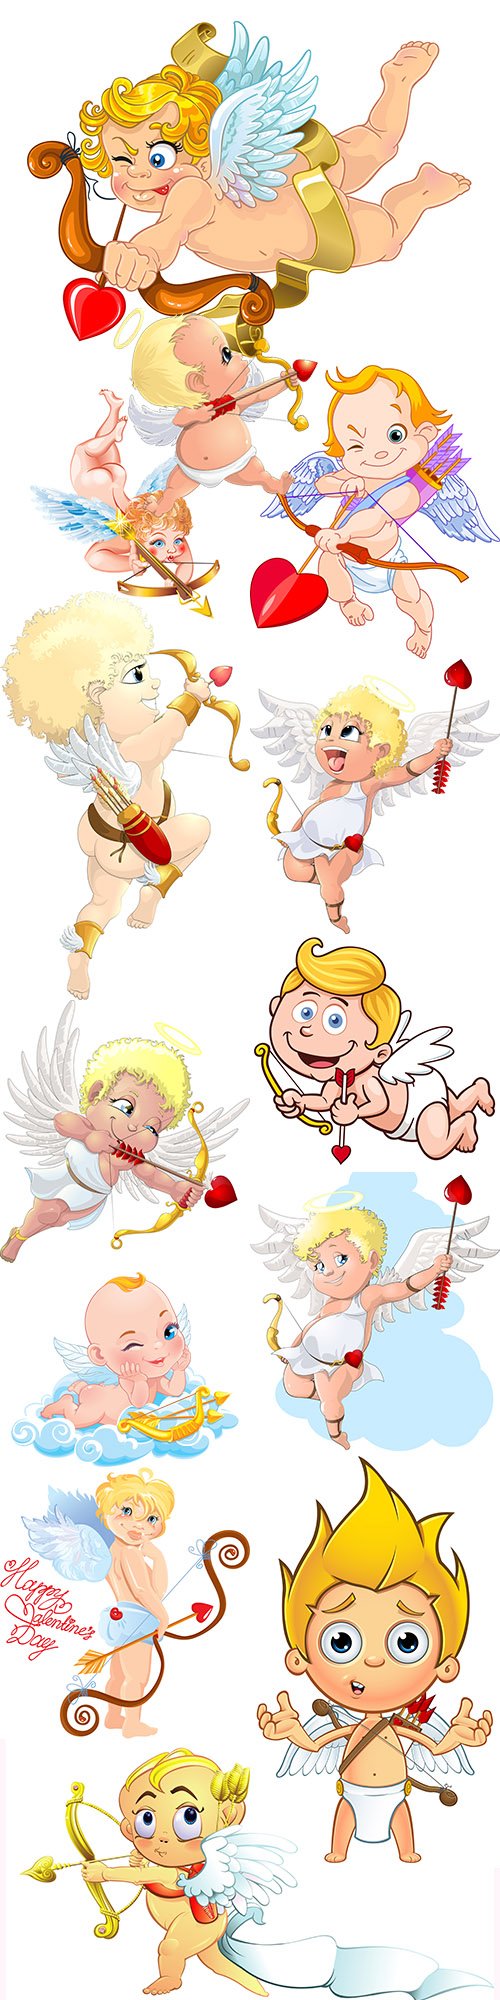 St. Valentine's day romantic cartoon cupid collection 4